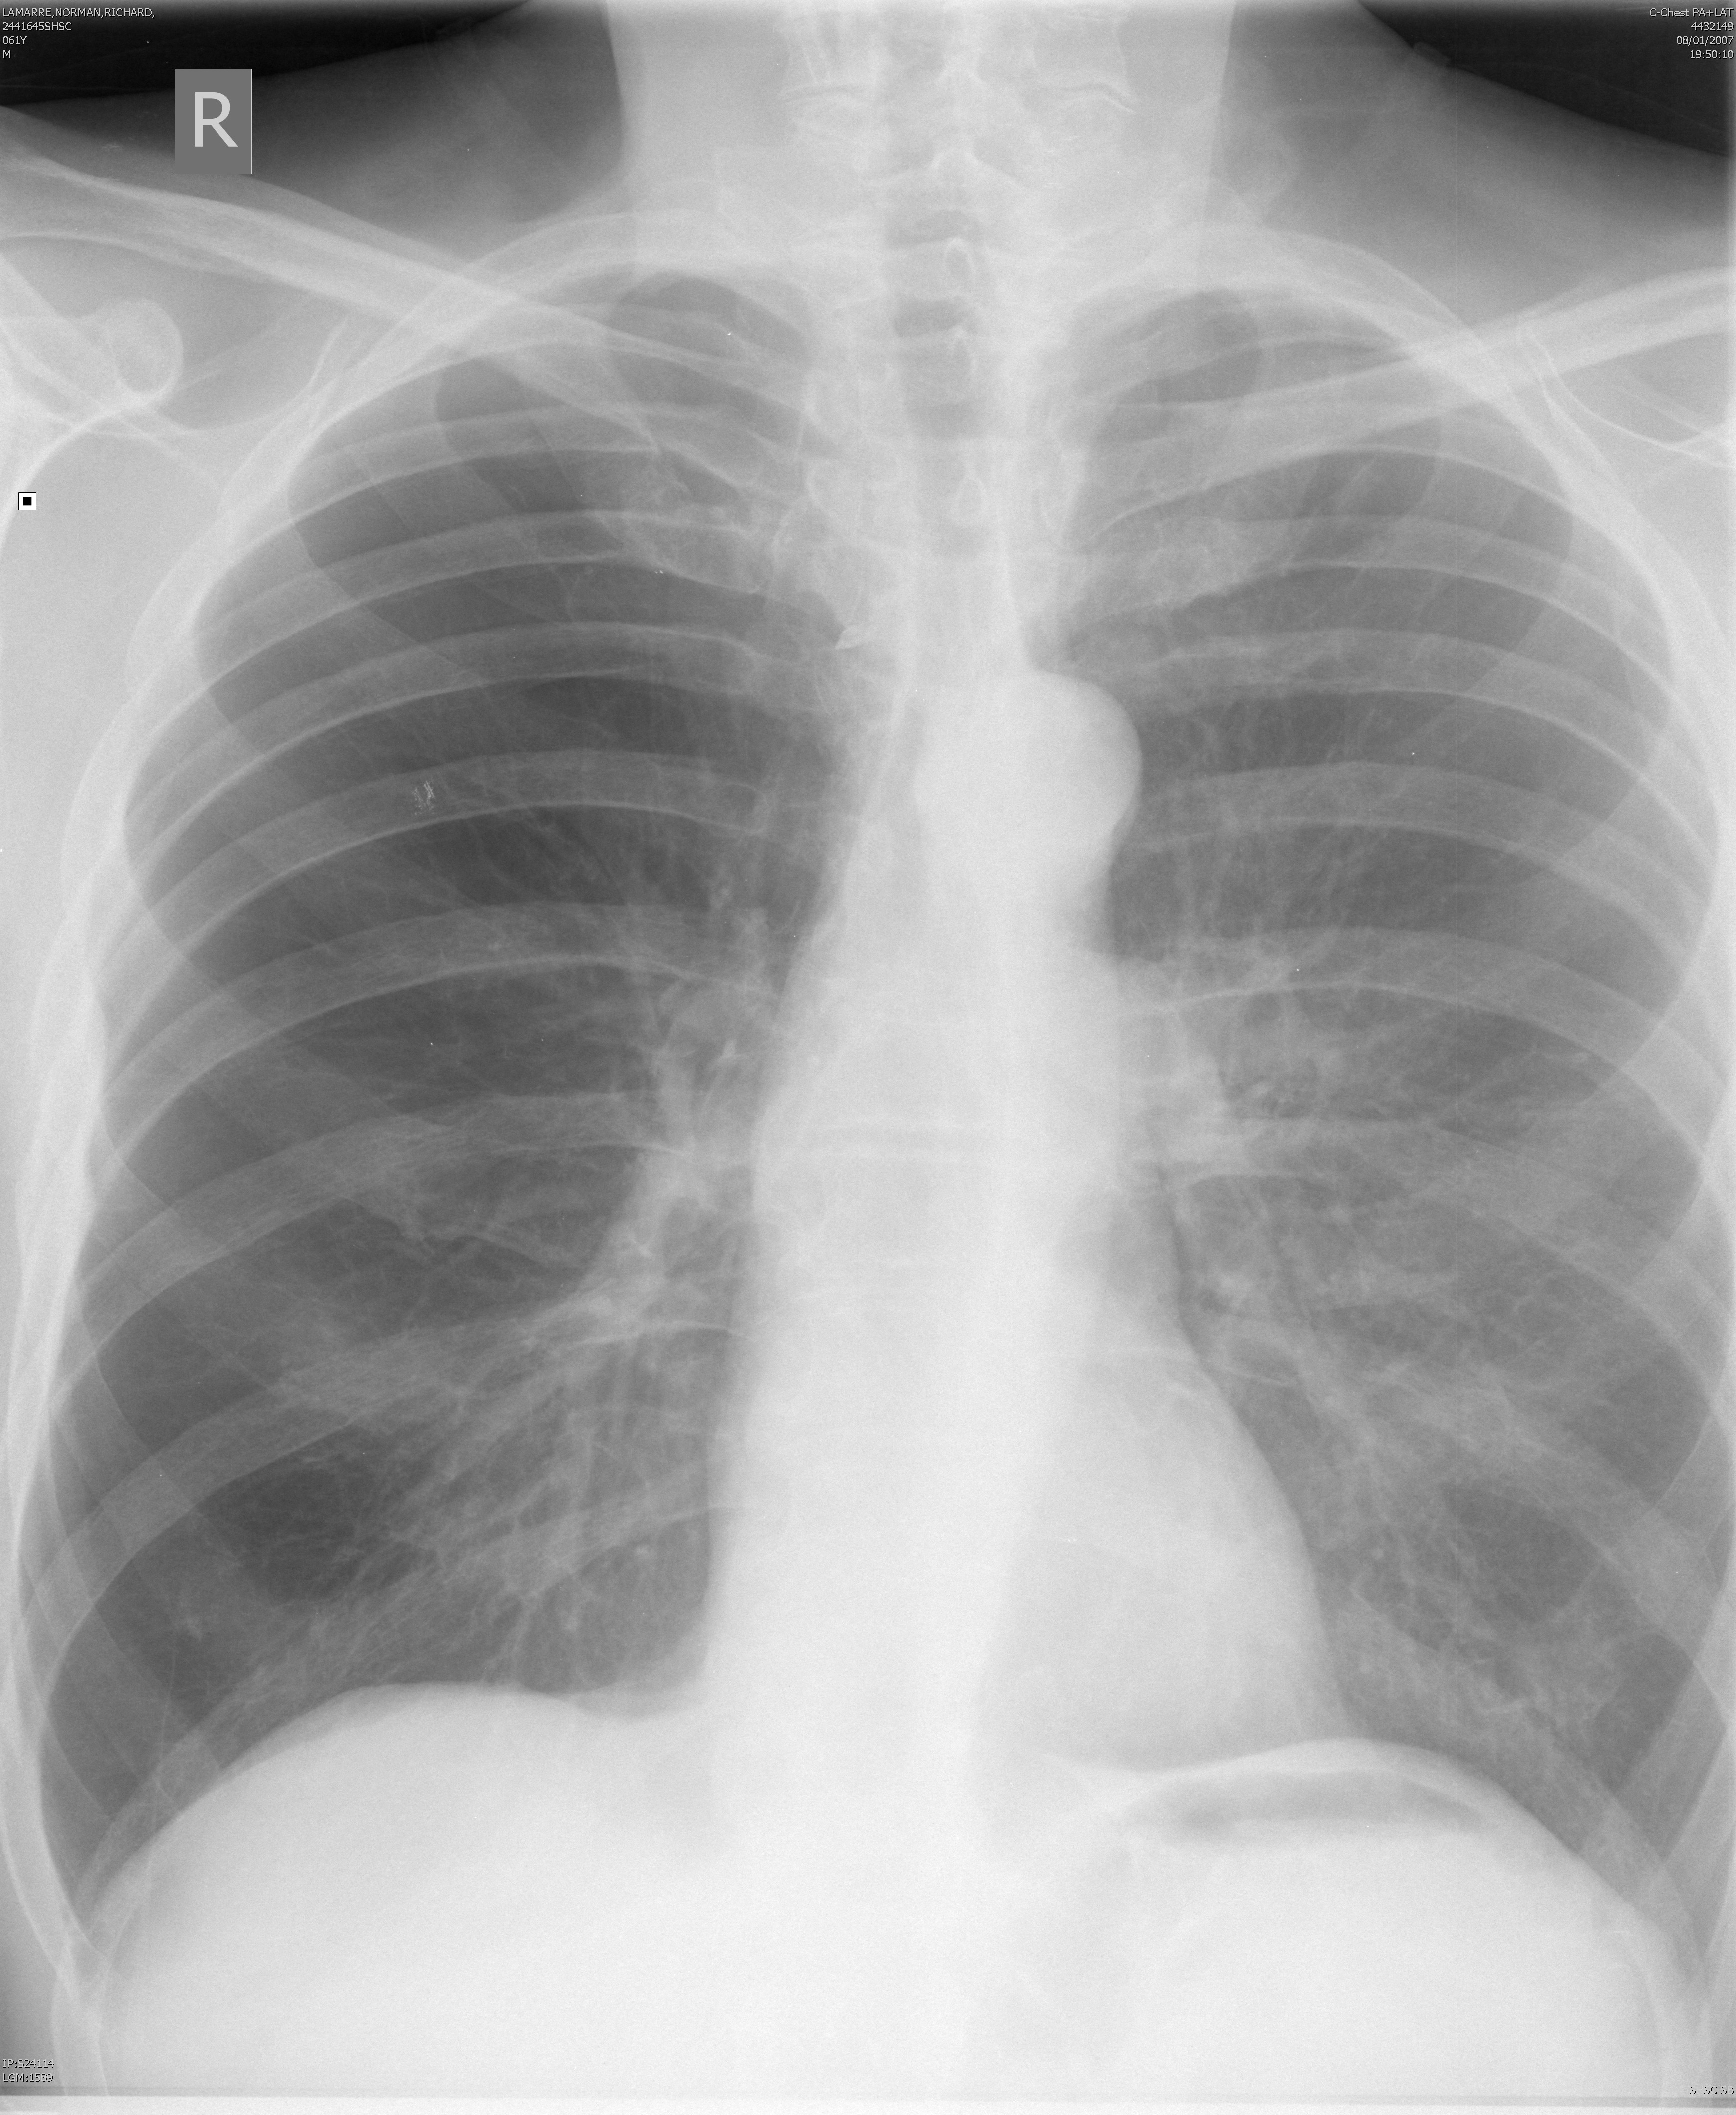 Unilat hyperl lung
(prob post viral)